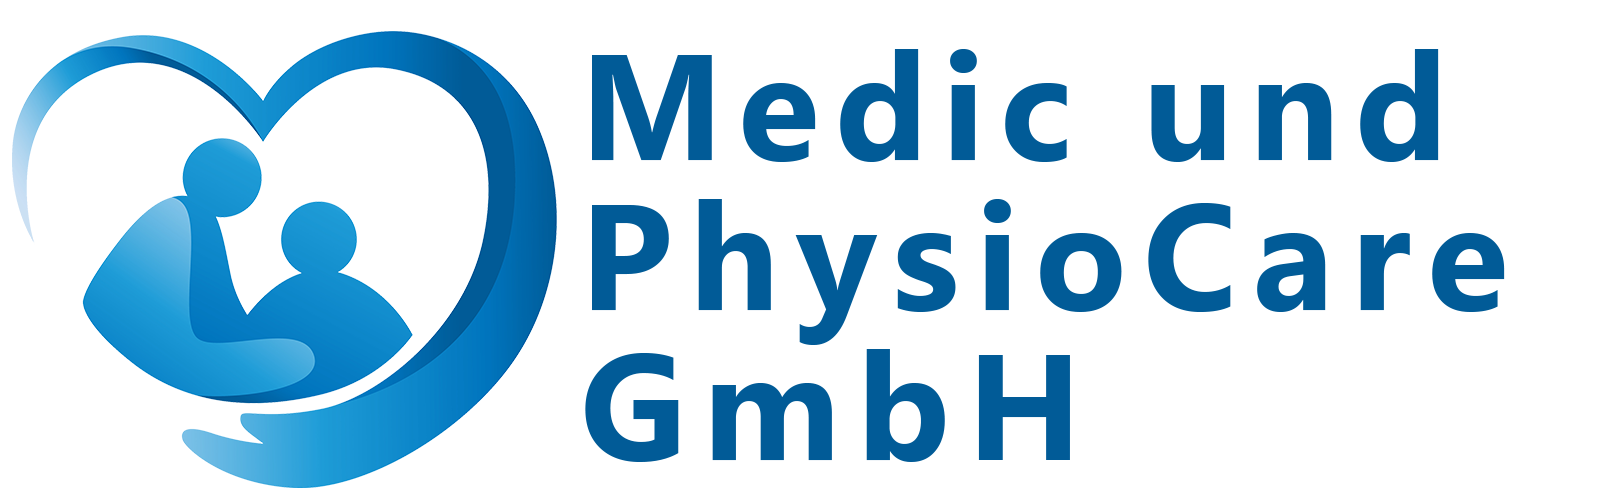 Medic und PhyioCare GmbH